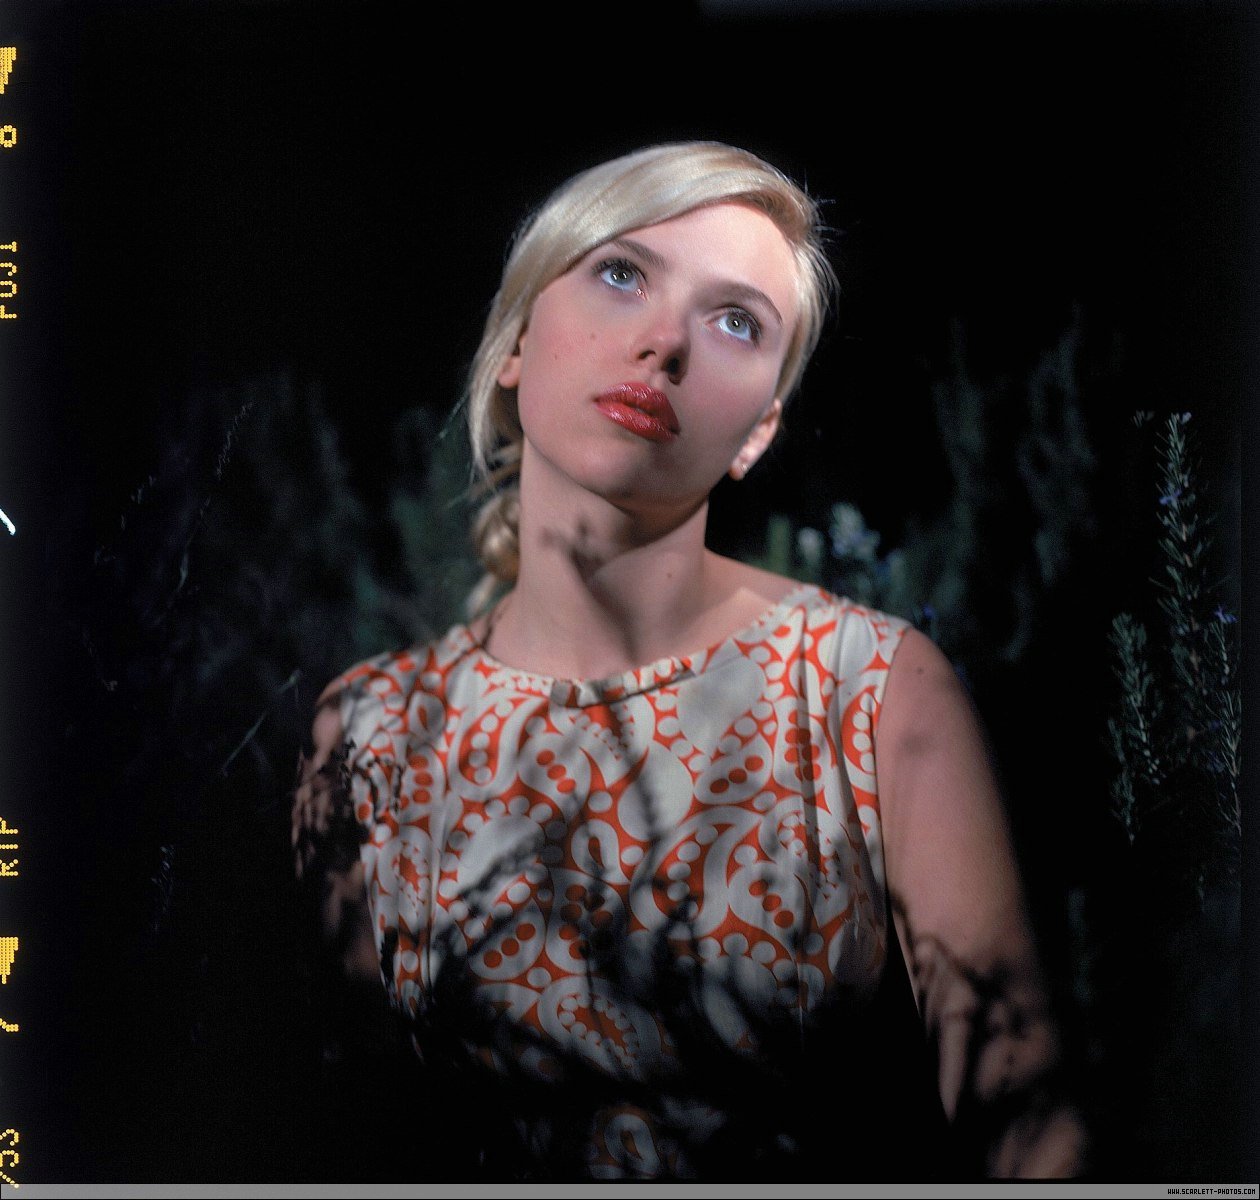 Scarlett Johansson Pictures Metrolyrics